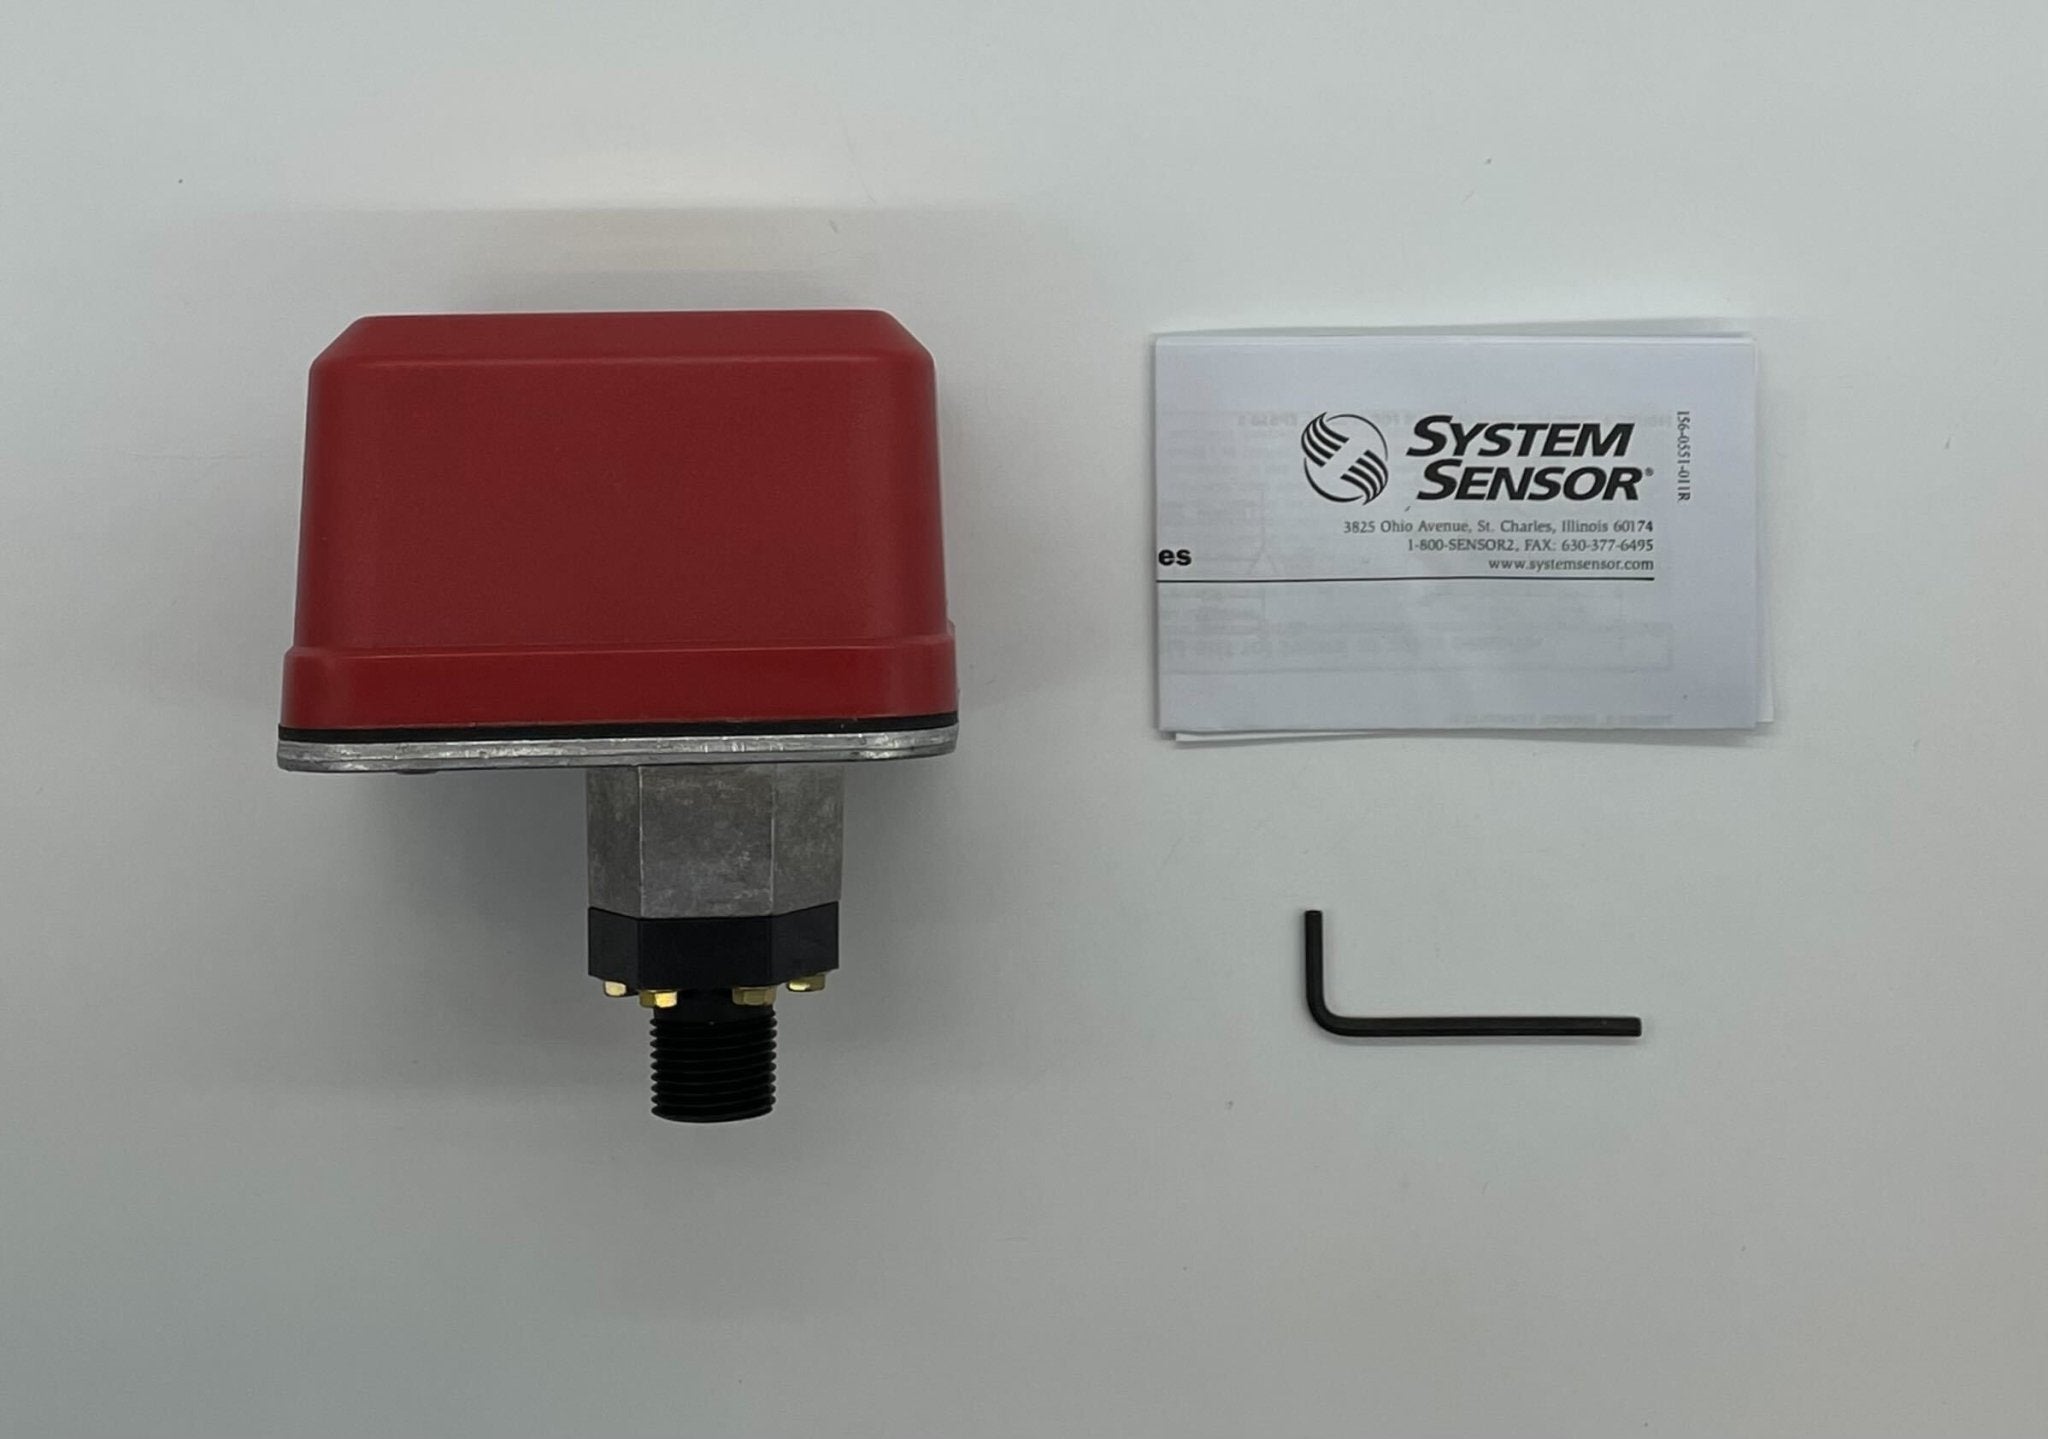 System Sensor EPS10-2 - The Fire Alarm Supplier